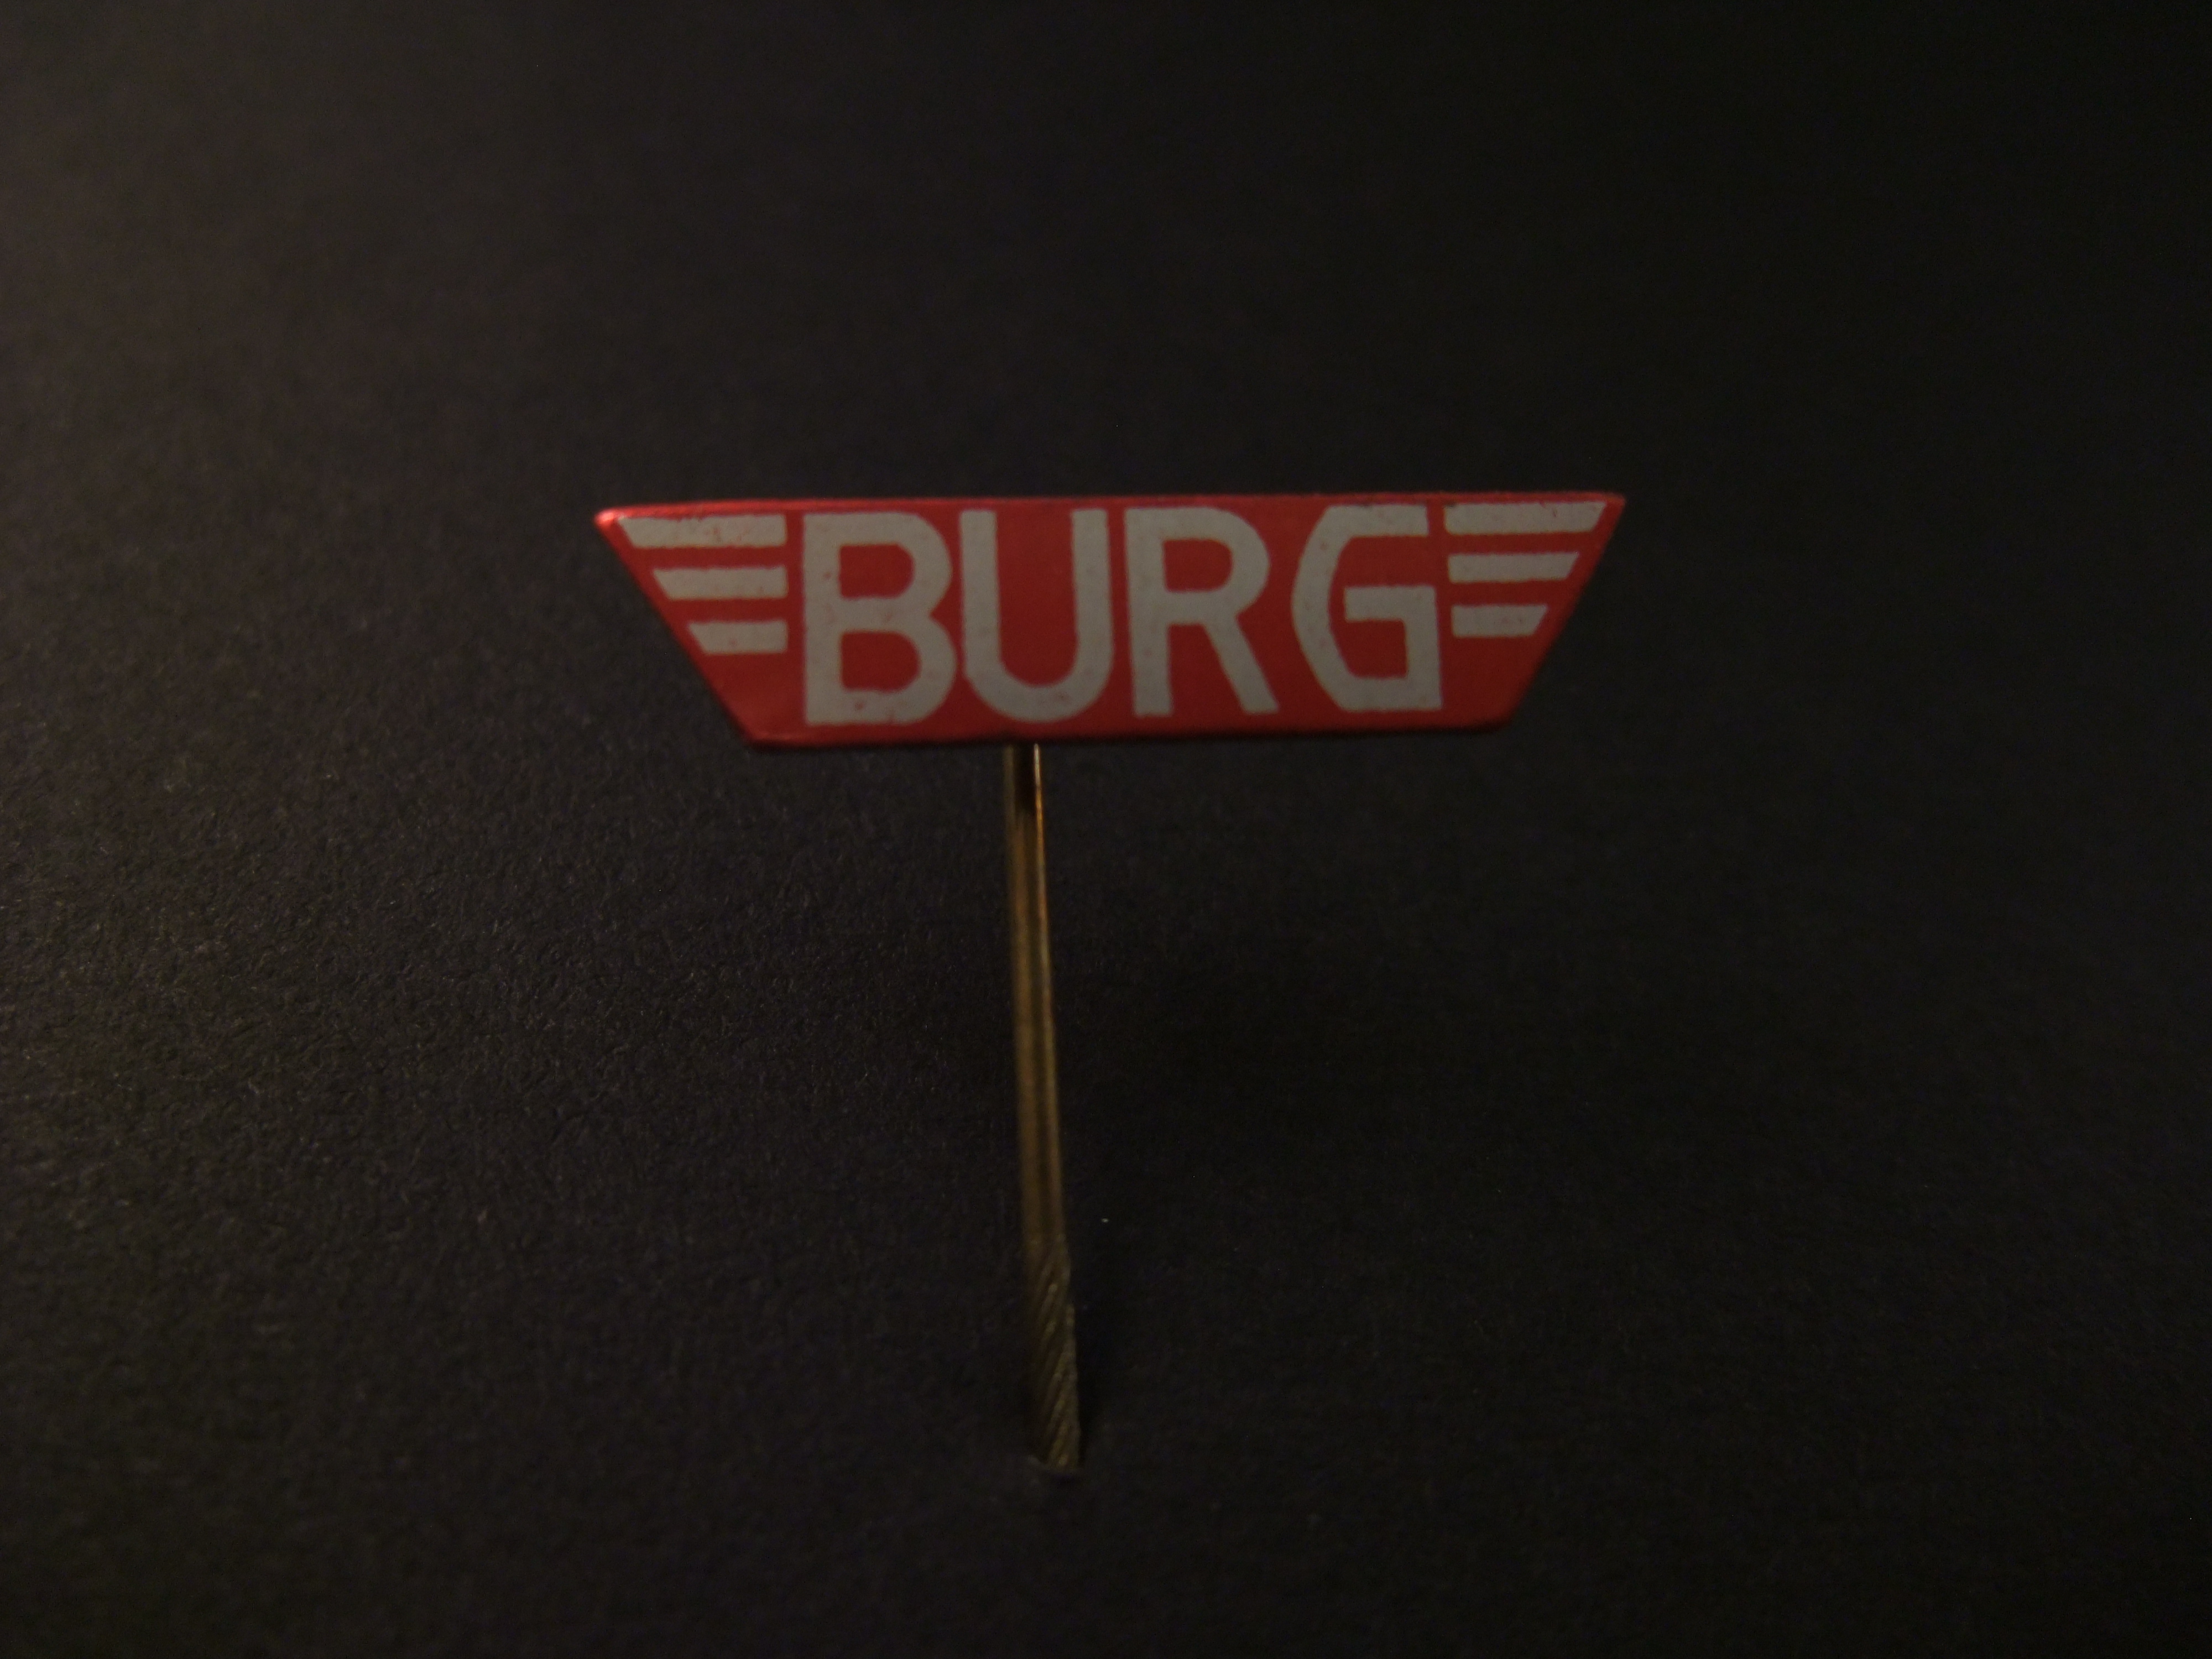 Burg Trailer Service ( trailerbouwer) CarrosseriebedrijfPijnacker rood logo